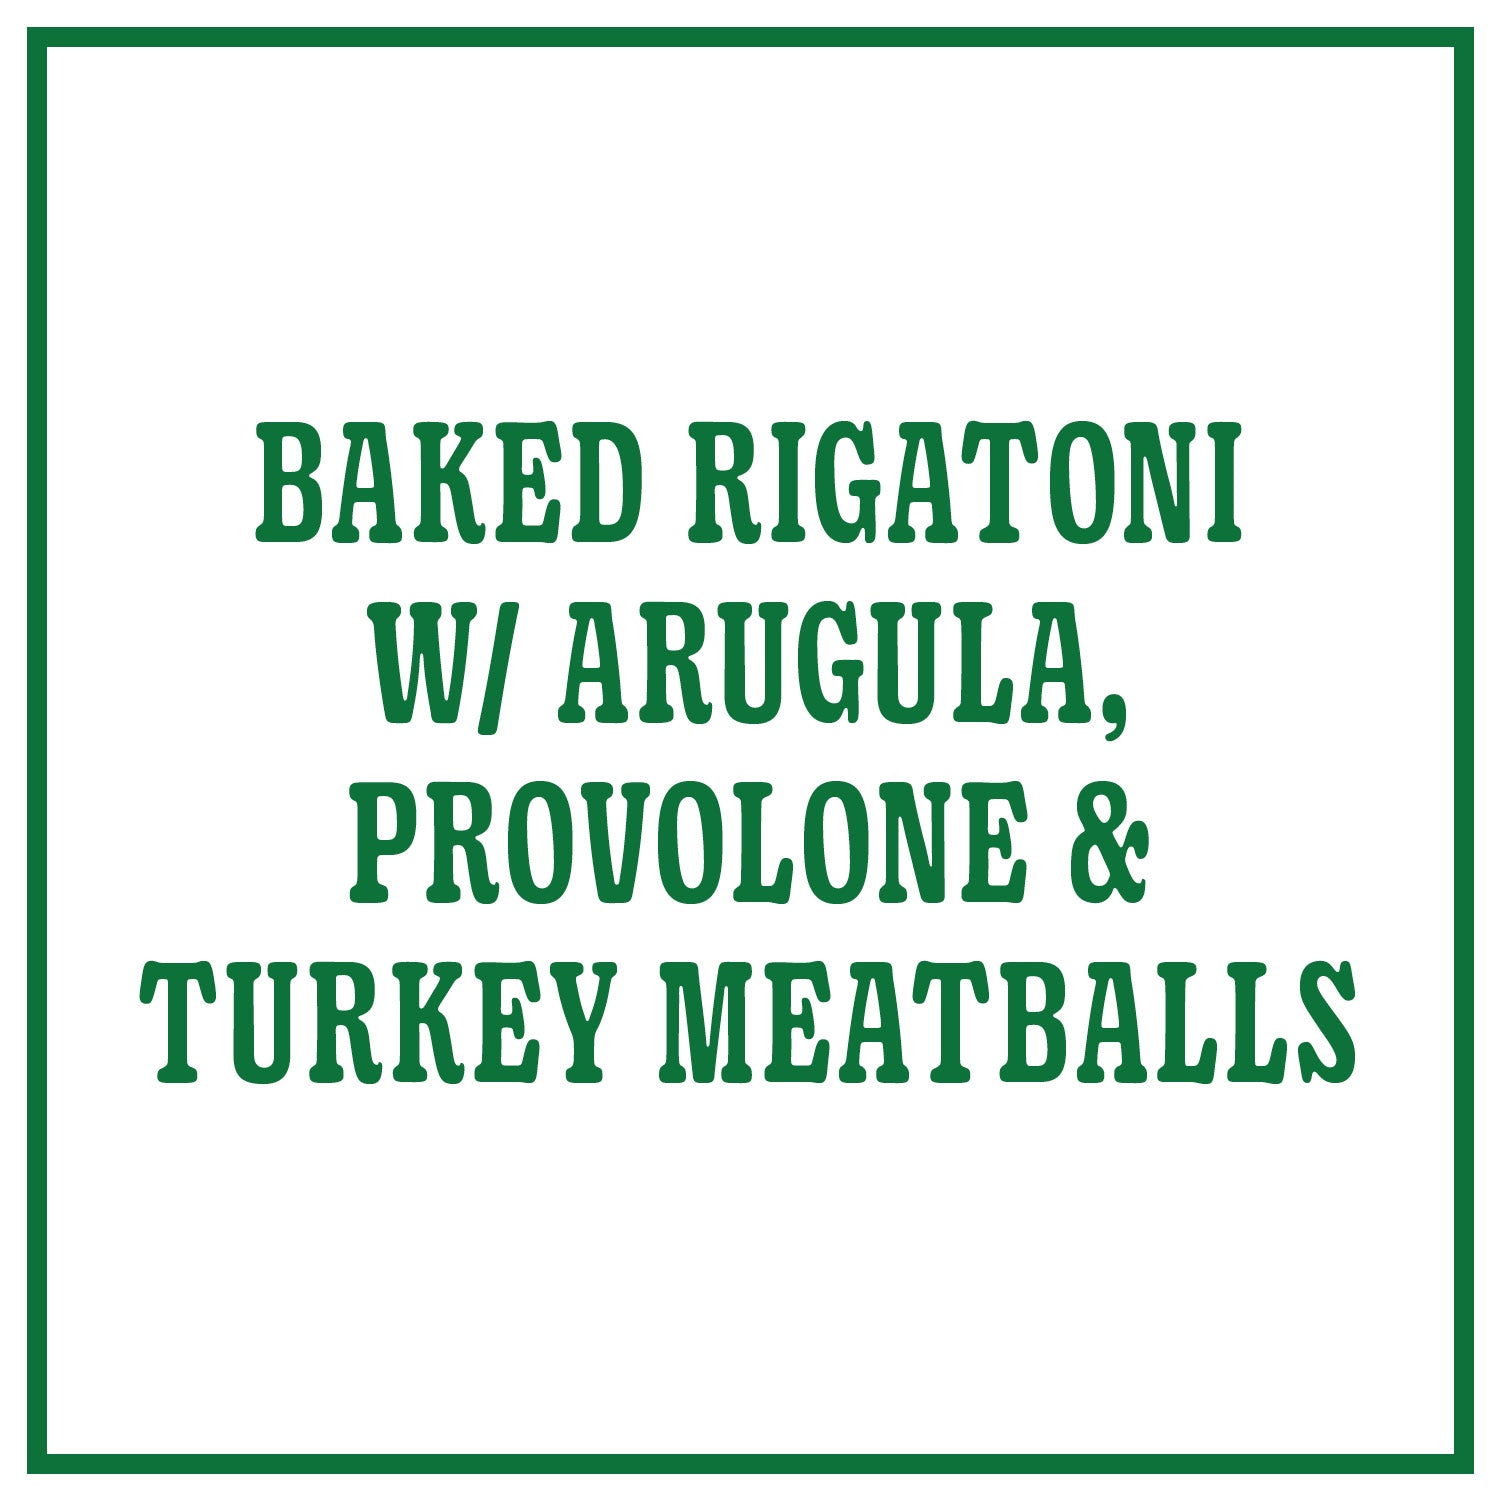 Baked Rigatoni with Arugula, Provolone & Turkey Meatballs